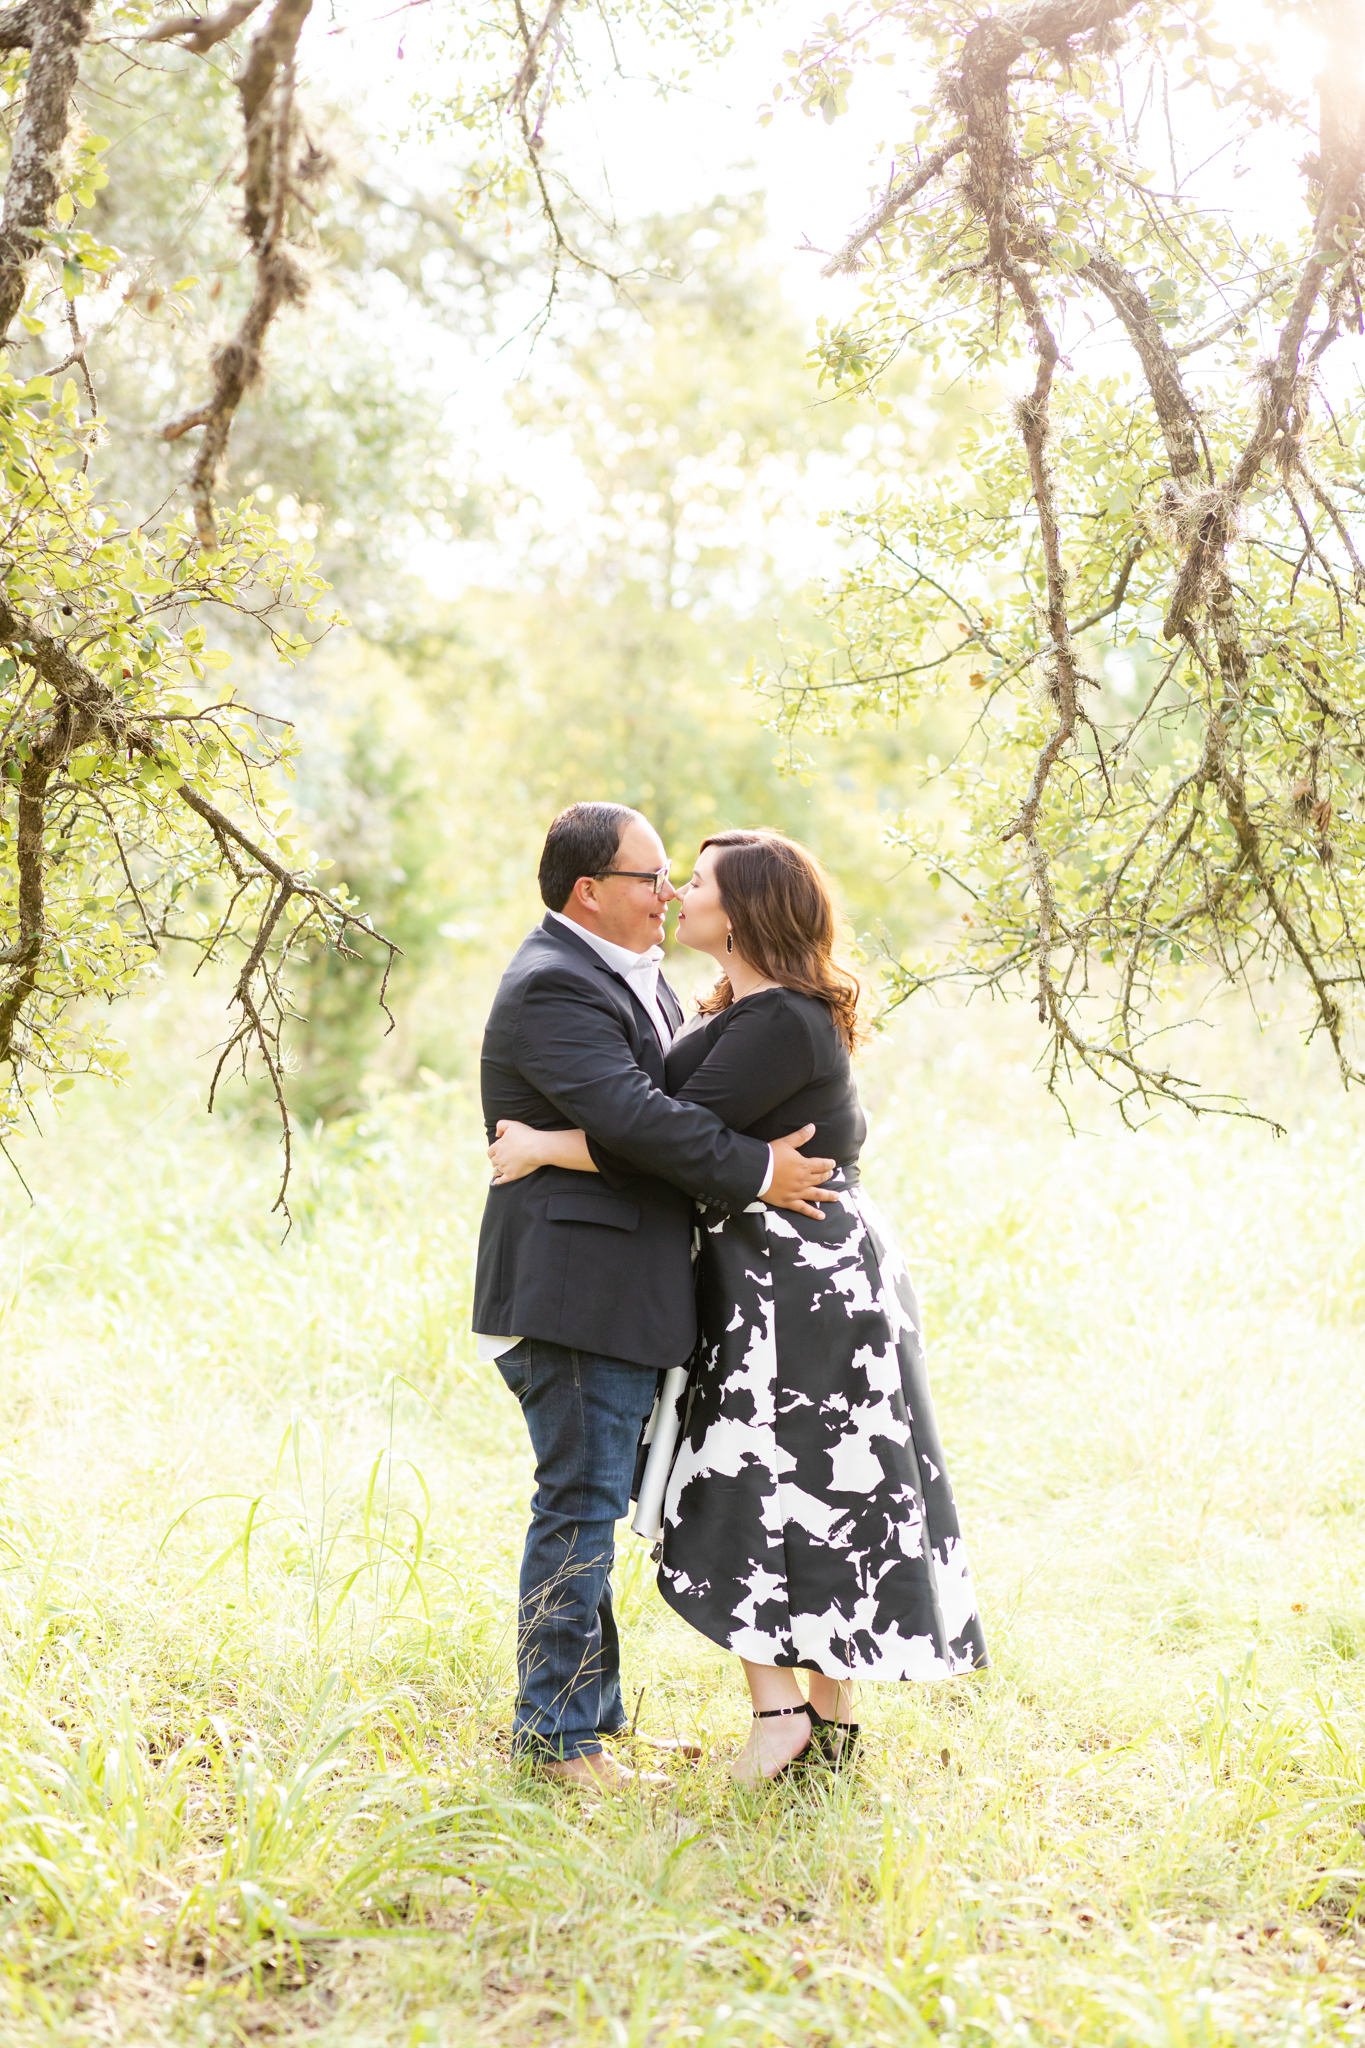 Engagement Session at Cibolo Nature Center in Boerne, TX by Dawn Elizabeth Studios, Boerne Wedding Photographer